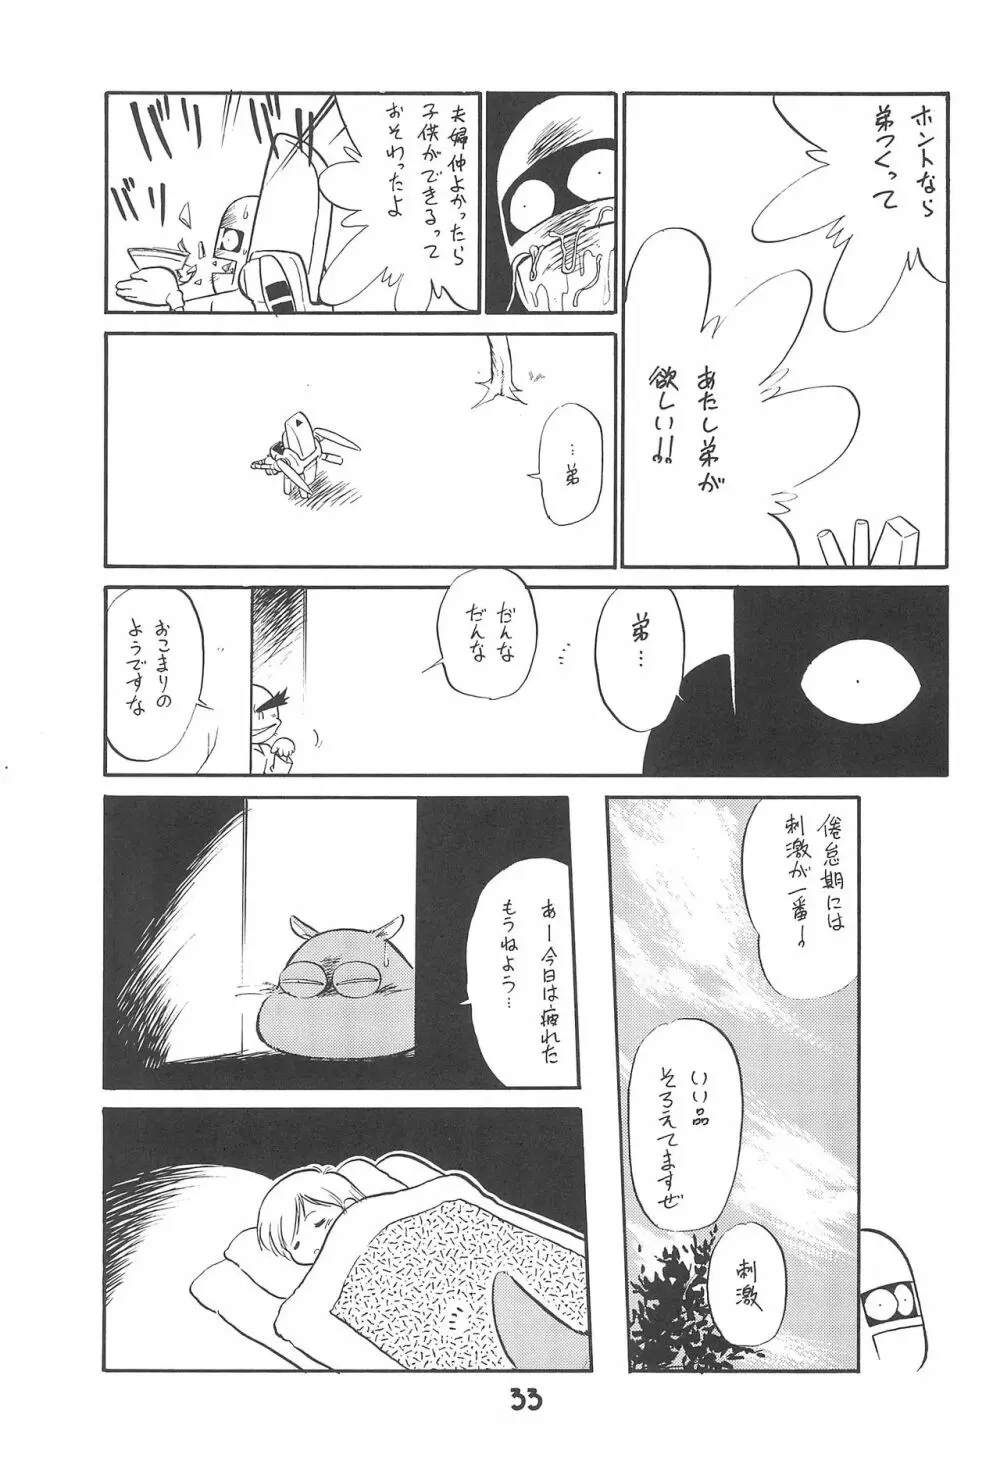 闘争心 - page32